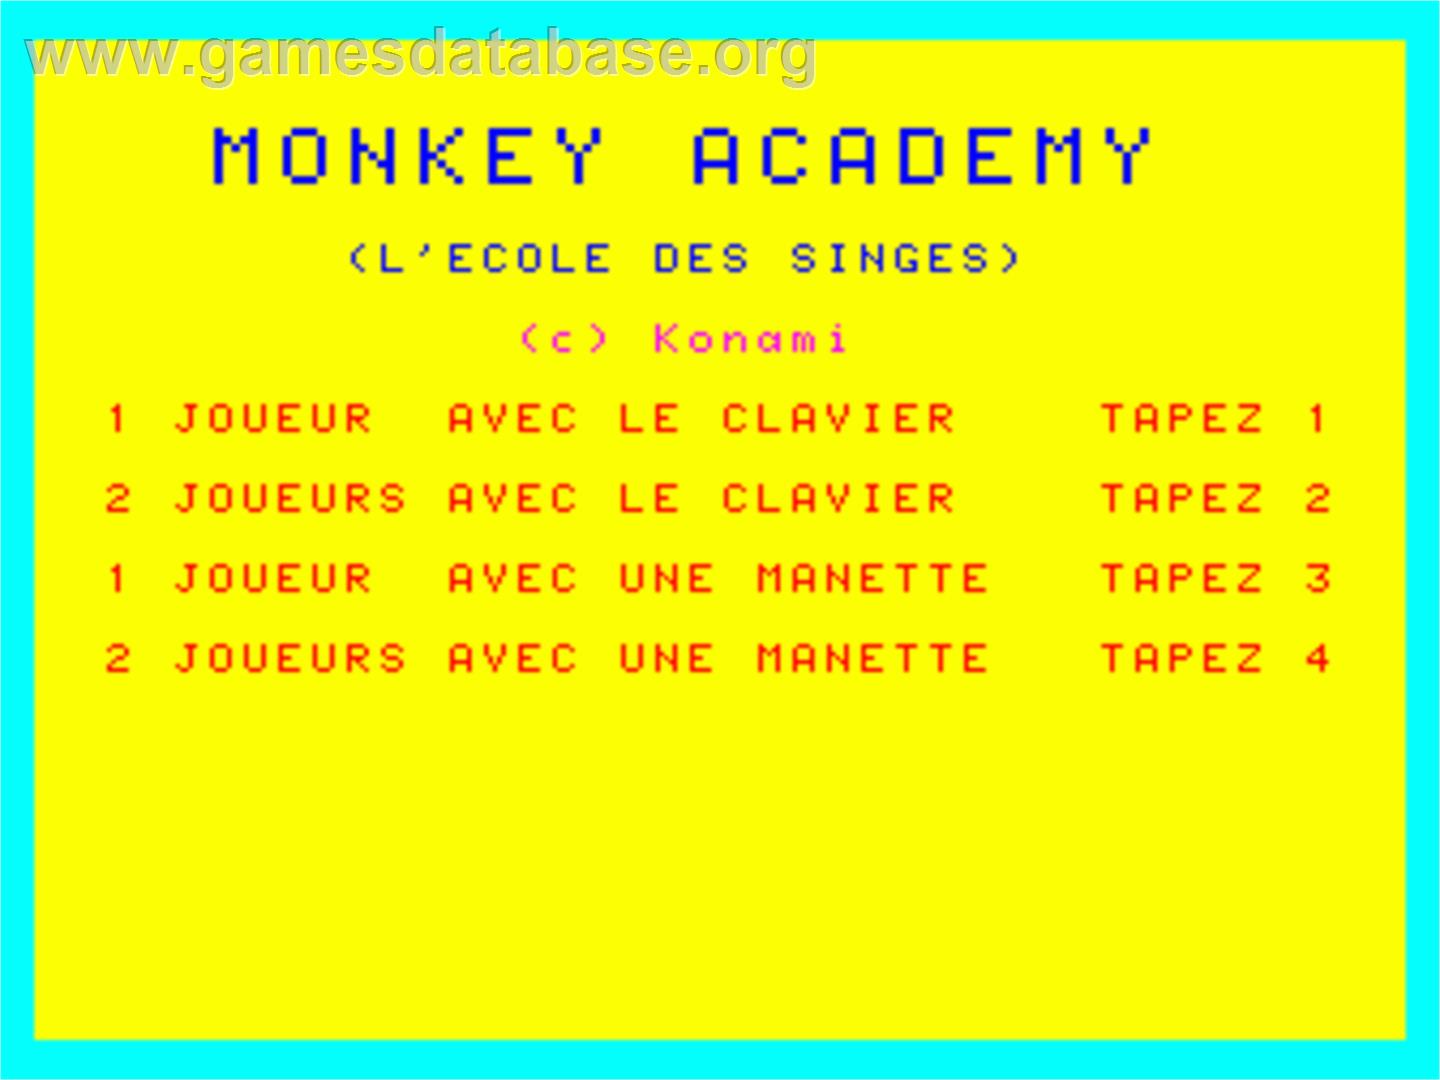 Monkey Academy - Philips VG 5000 - Artwork - Title Screen